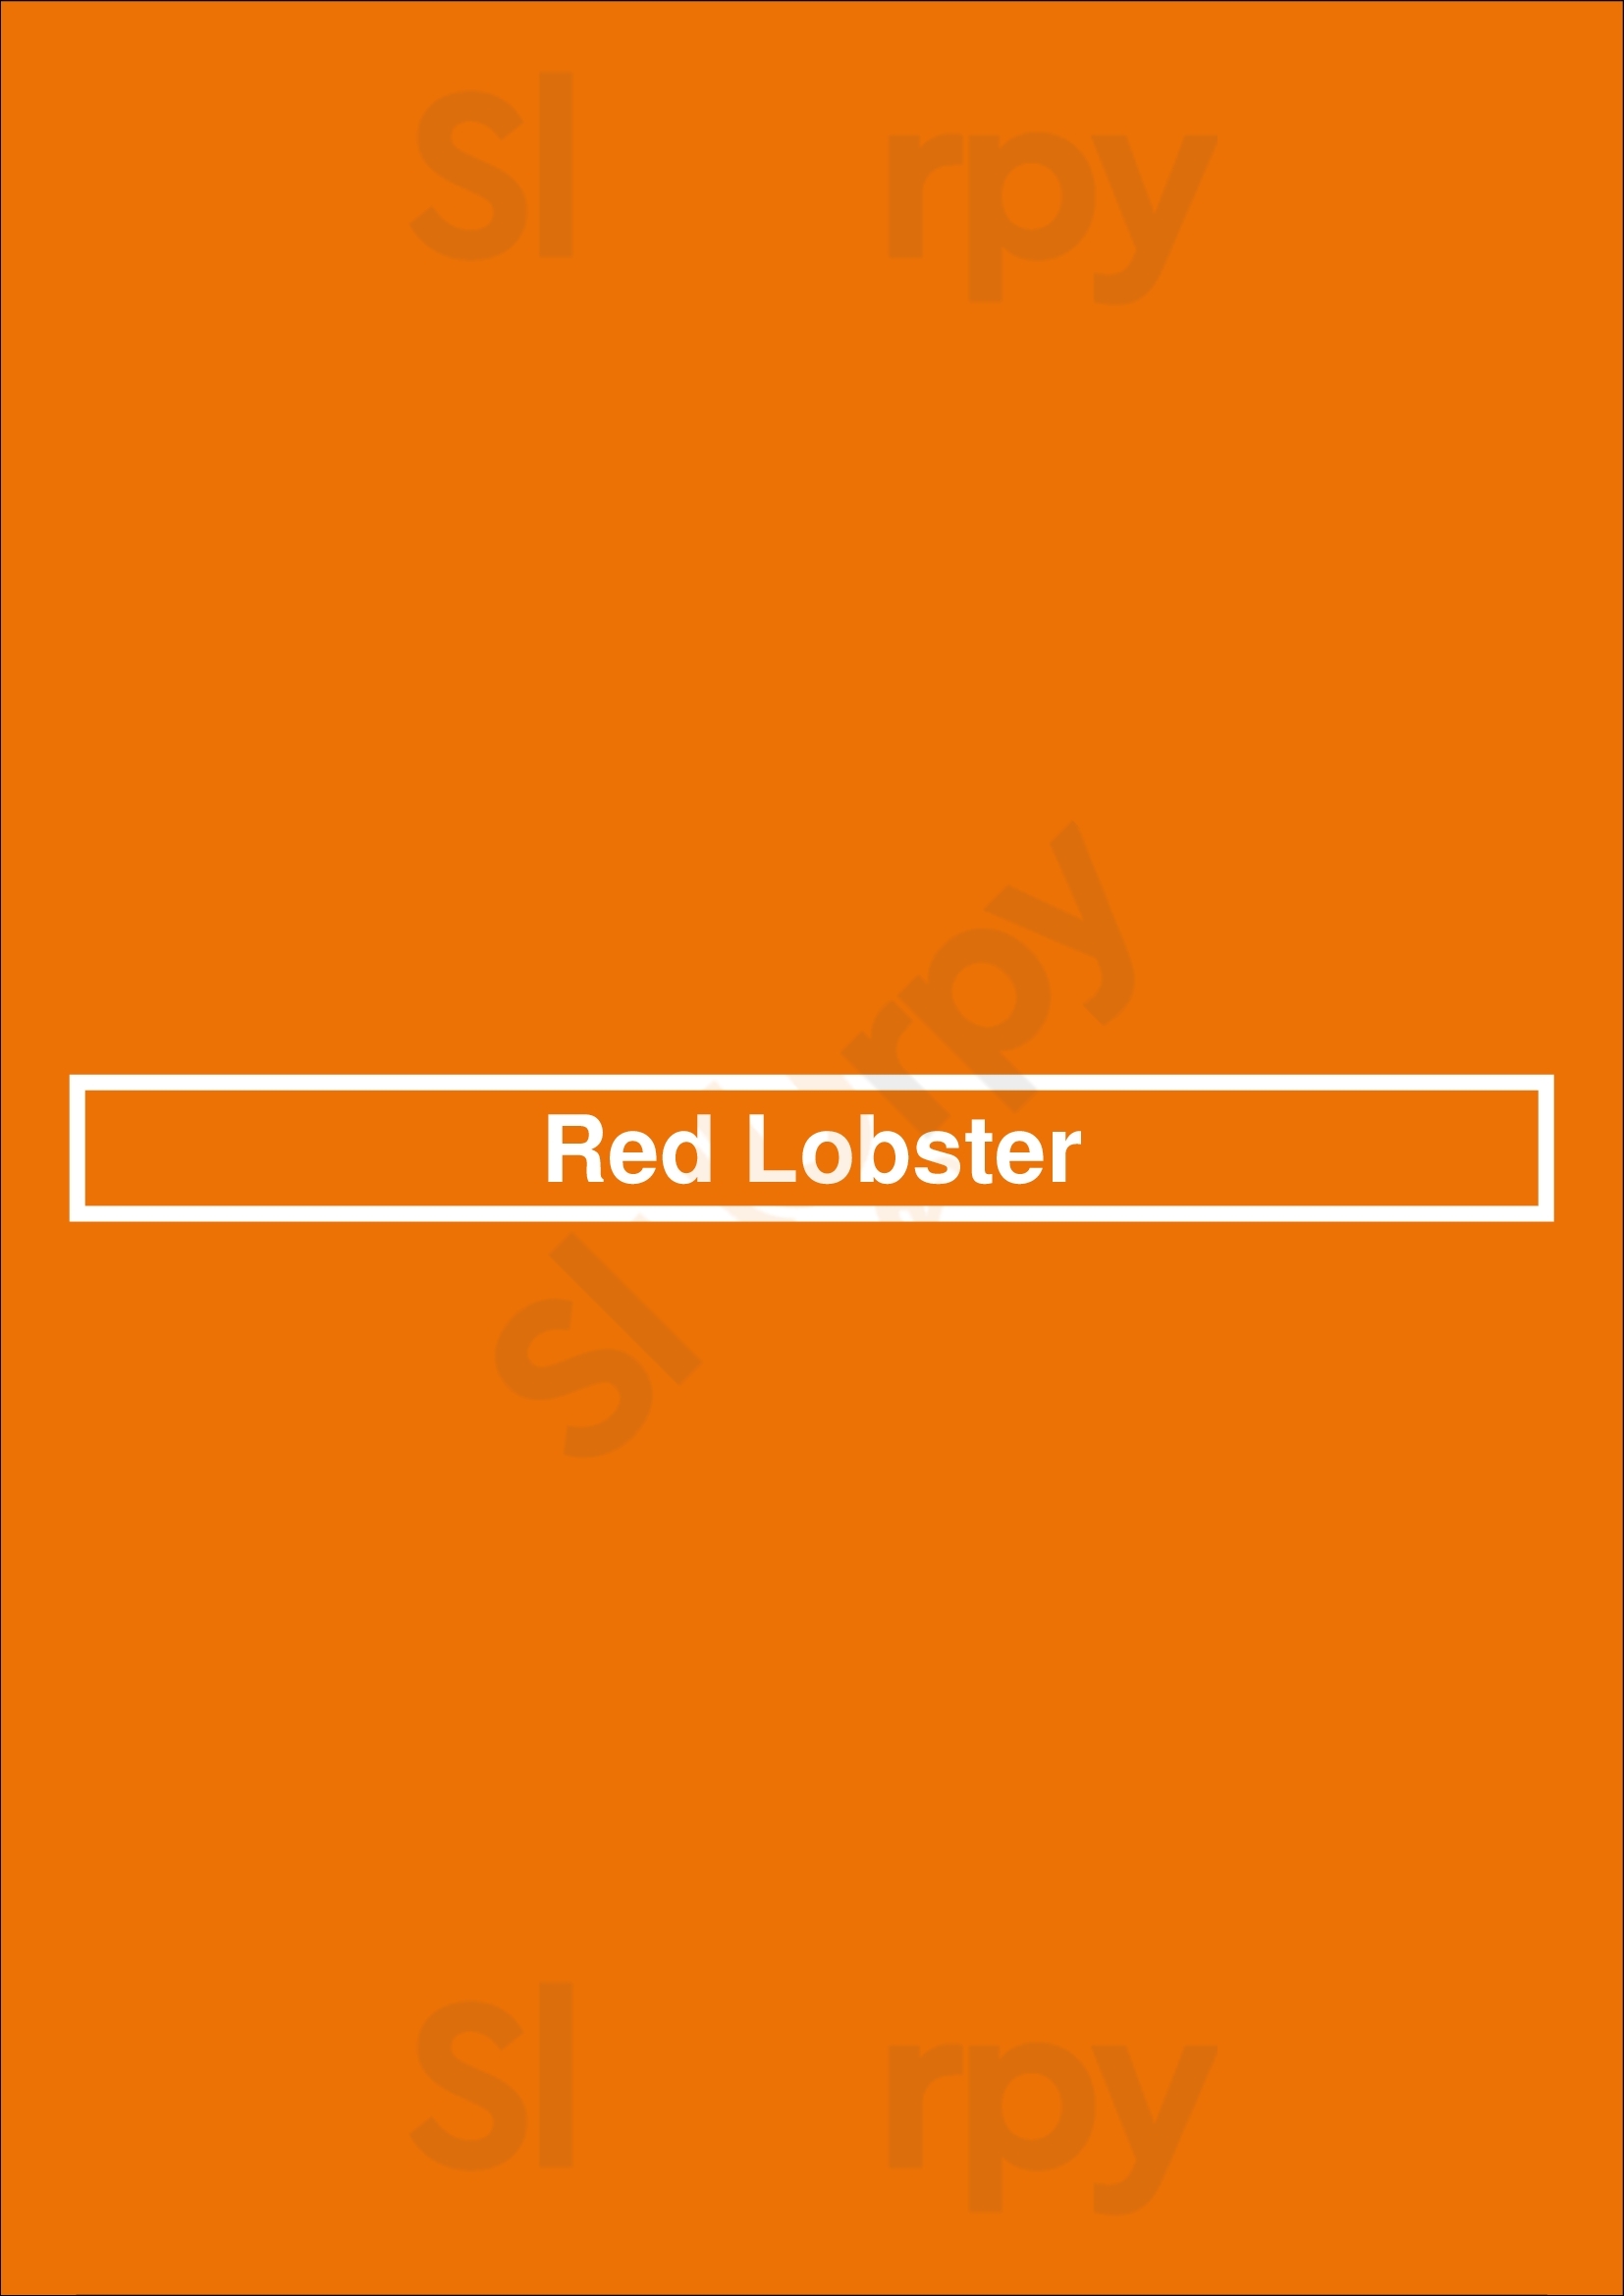 Red Lobster Brooklyn Menu - 1